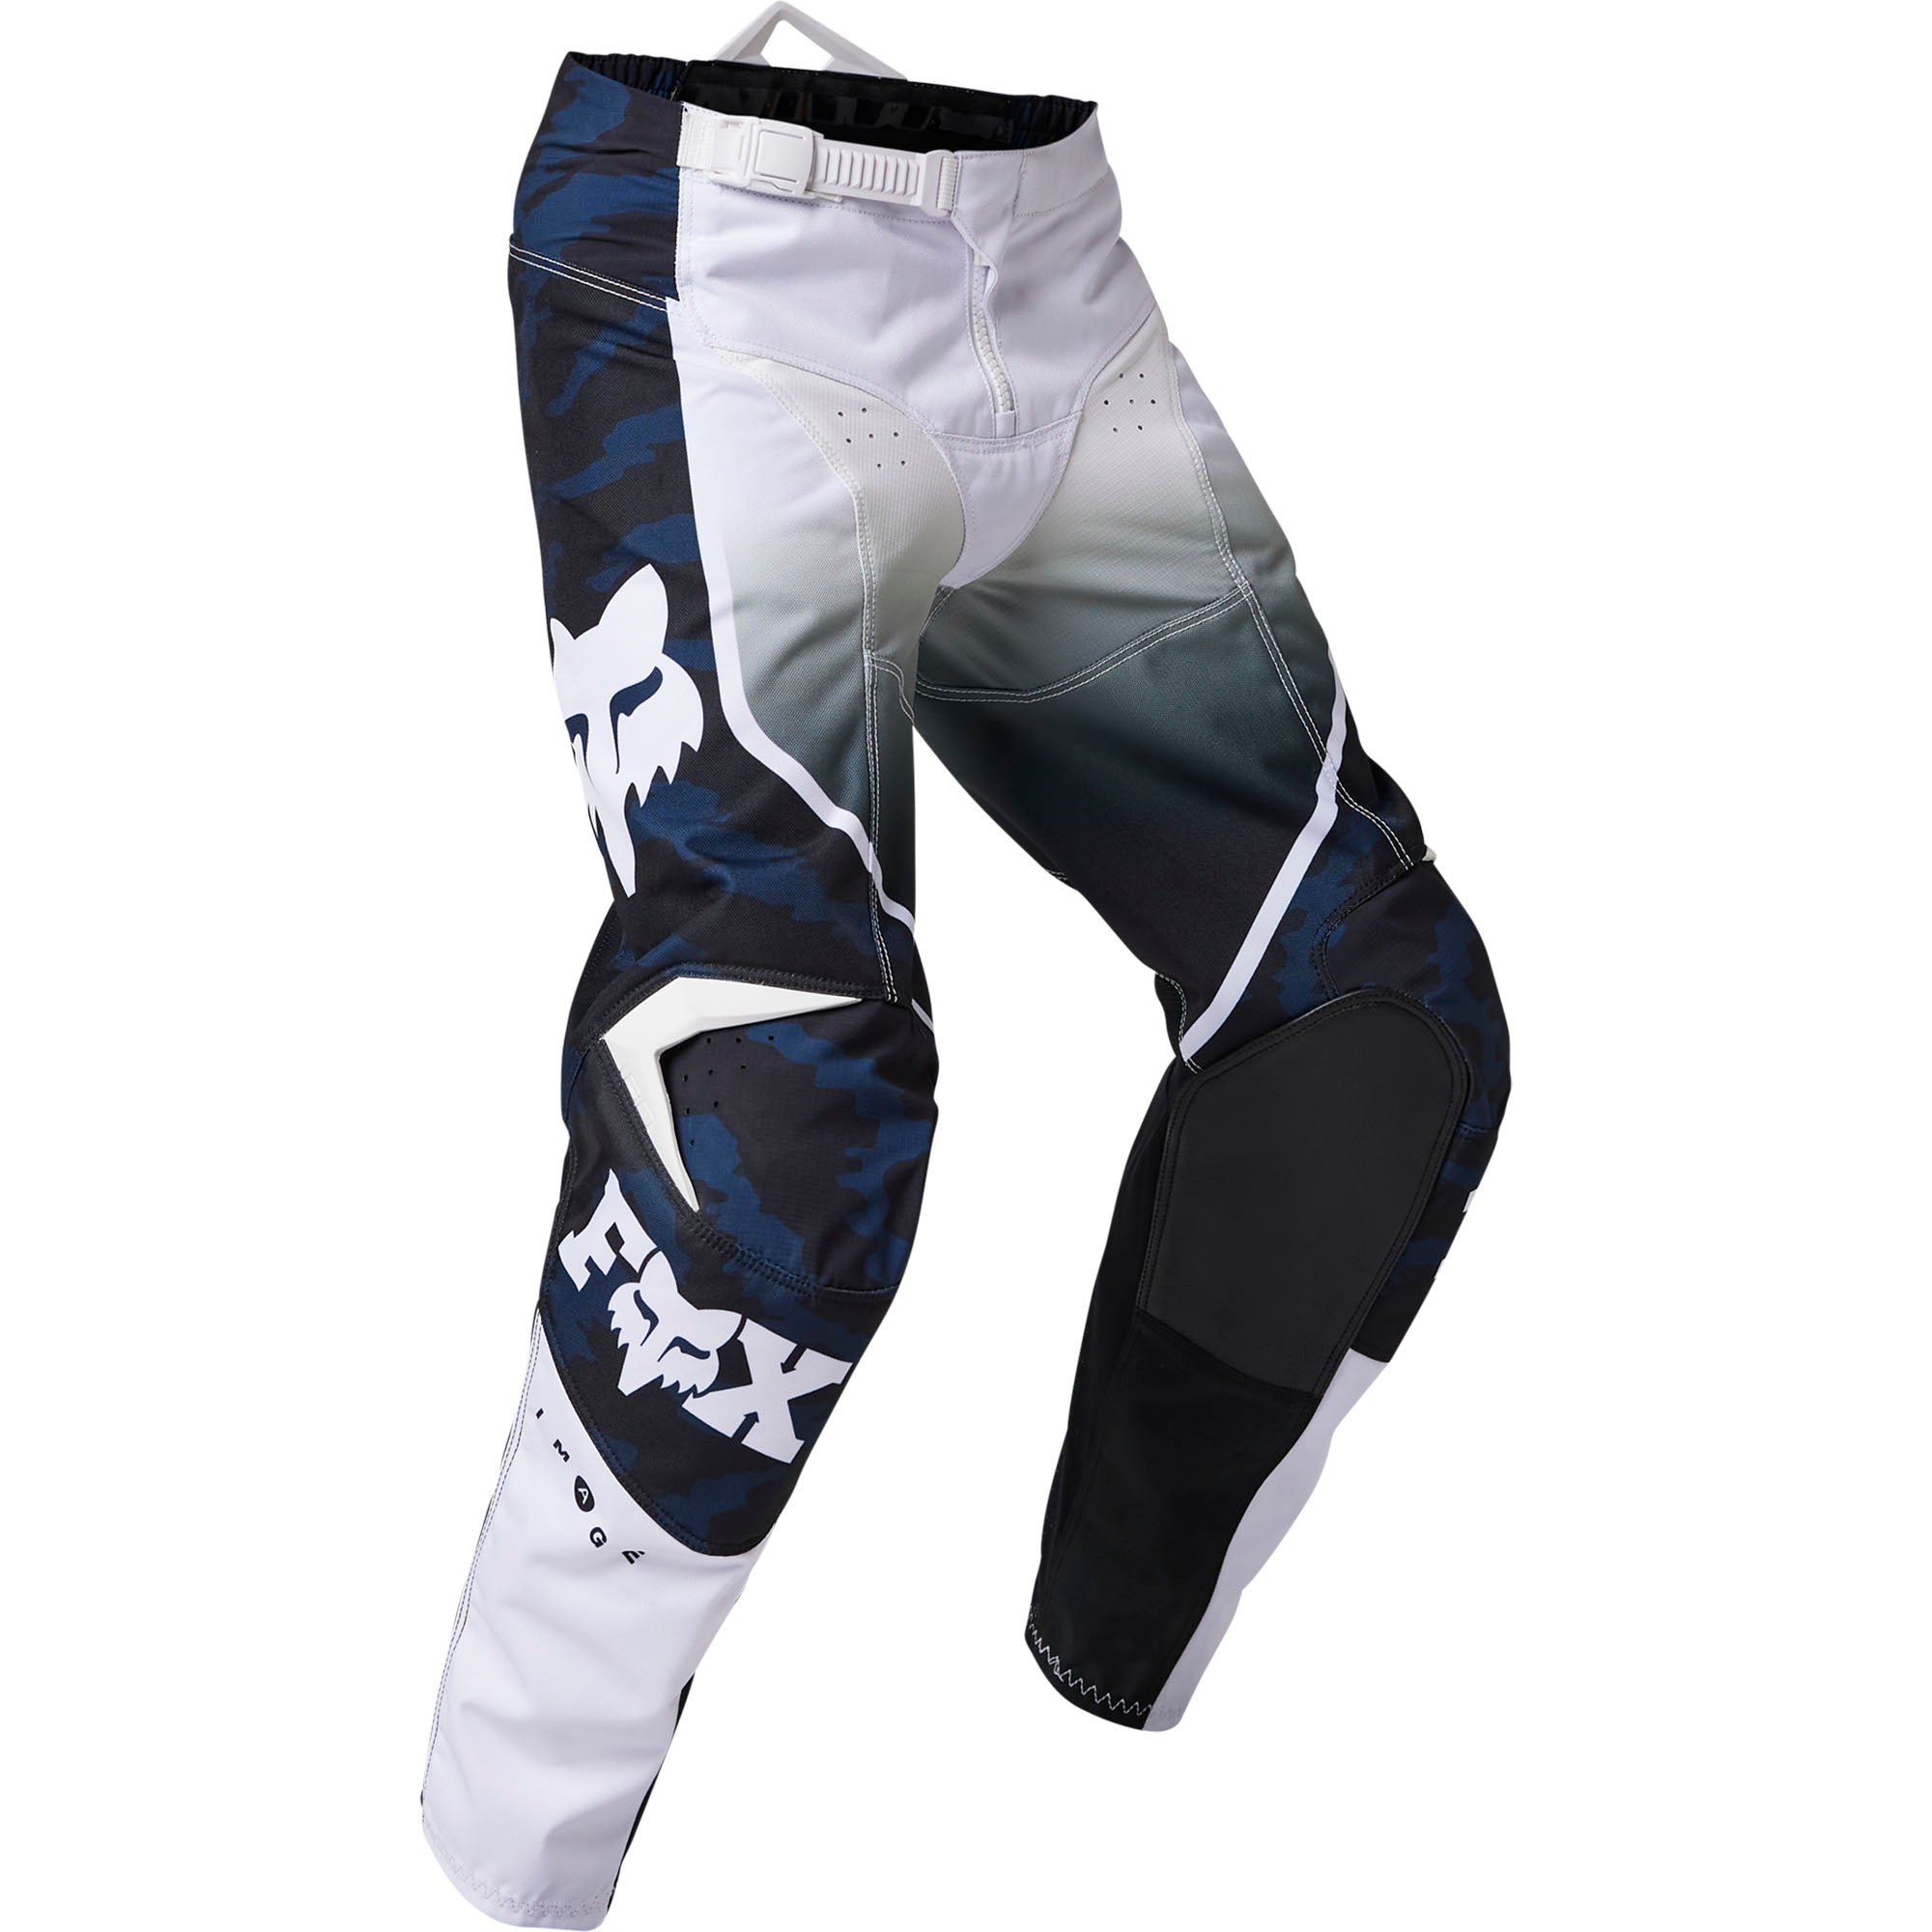 Fox Racing Youth 180 Nuklr Motocross Pants